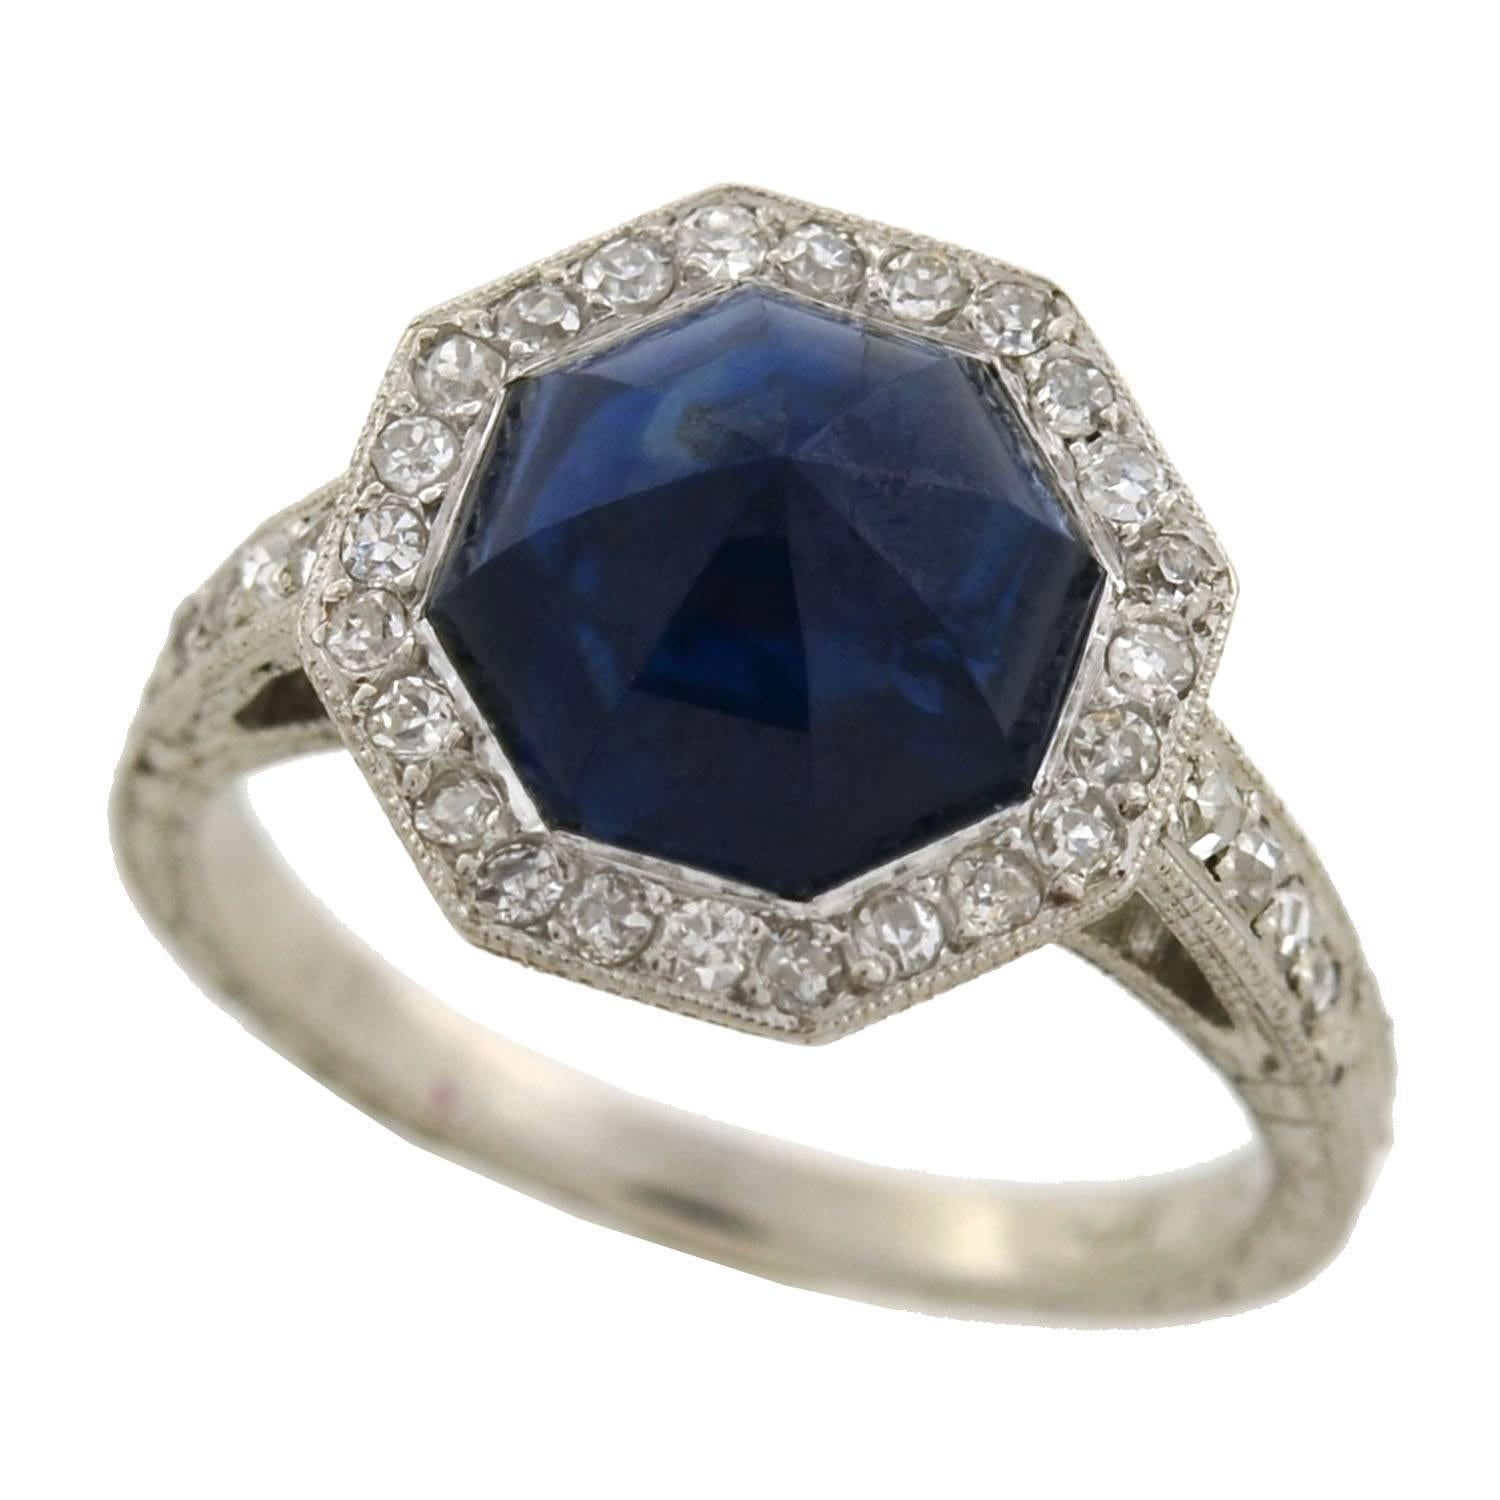 Women's Art Deco 2.25 Carat Octagonal Cabochon Cut Sapphire Diamond Ring